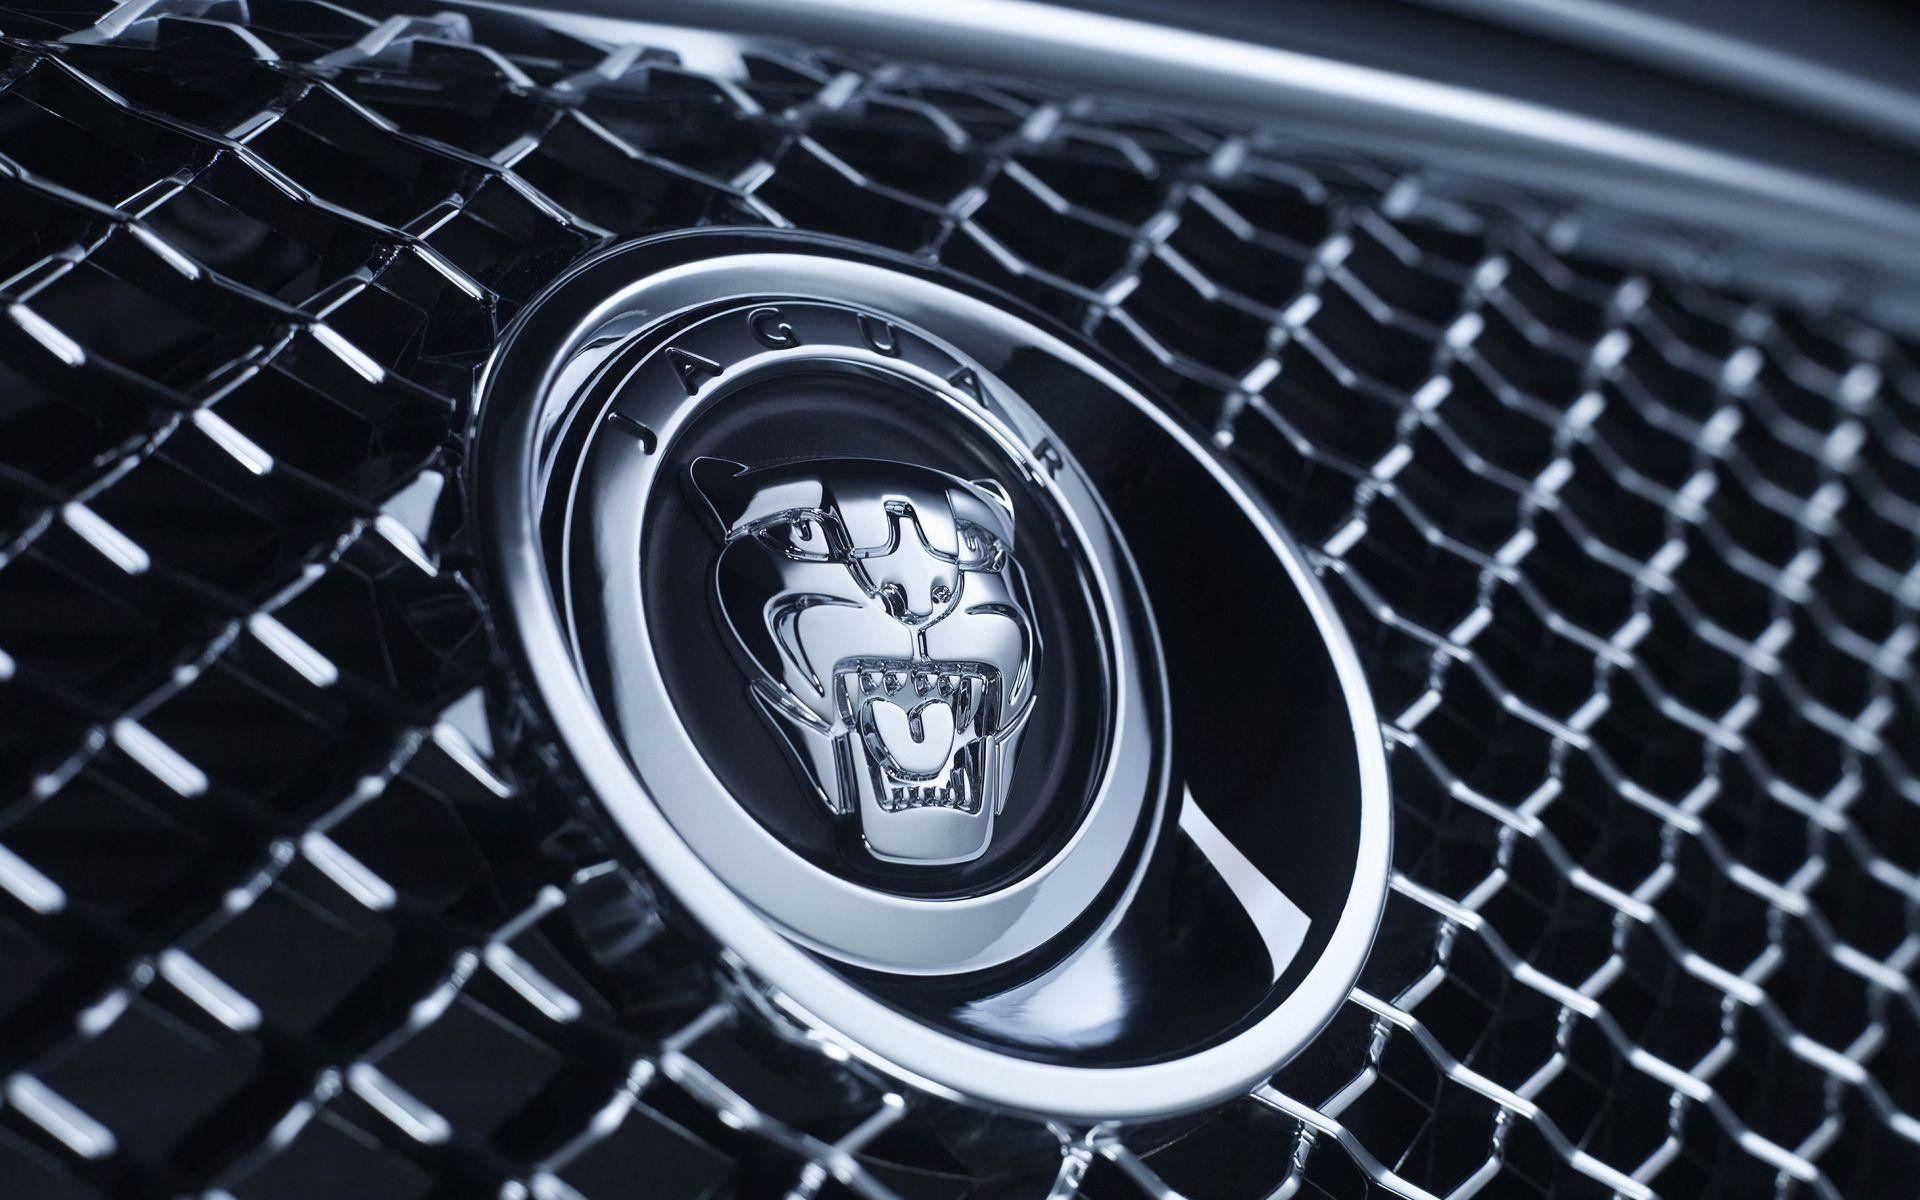 Jaguar Car Logo Desktop Wallpaper 59002 1920x1200 px